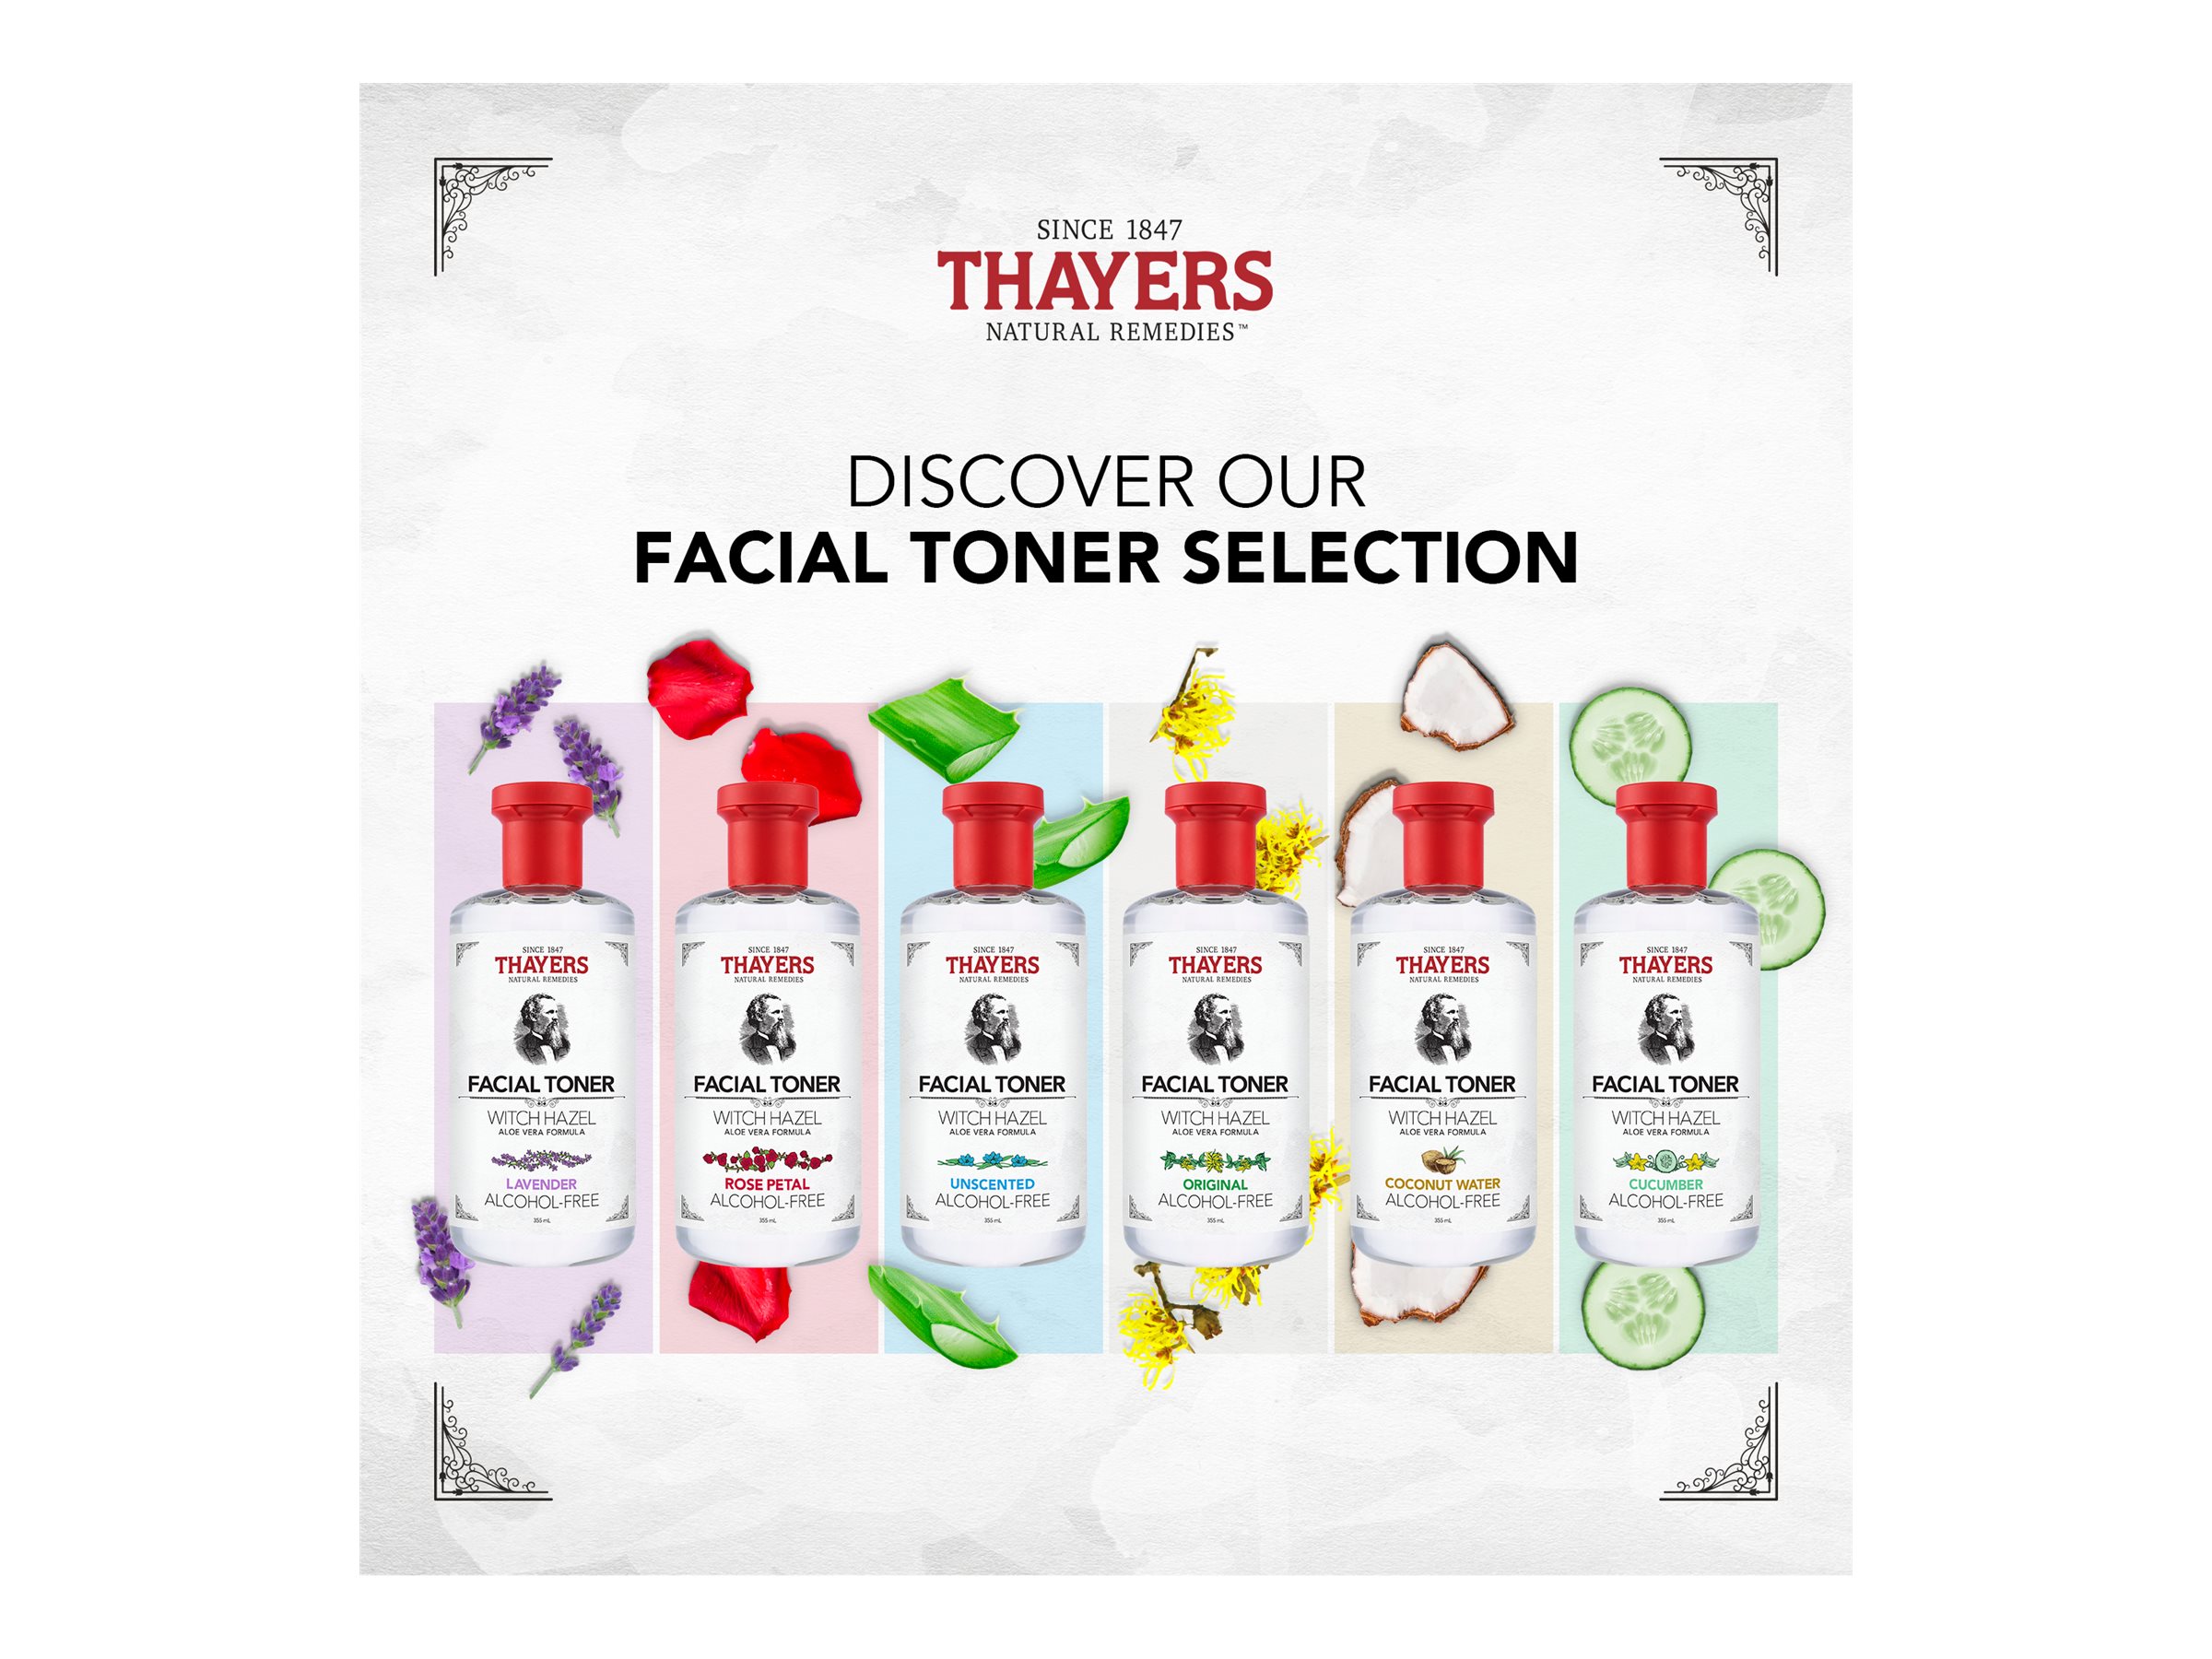 THAYERS Facial Toner Alcohol-Free - Witch Hazel with Aloe Vera Formula - Cucumber - All Skin Types - 355mL